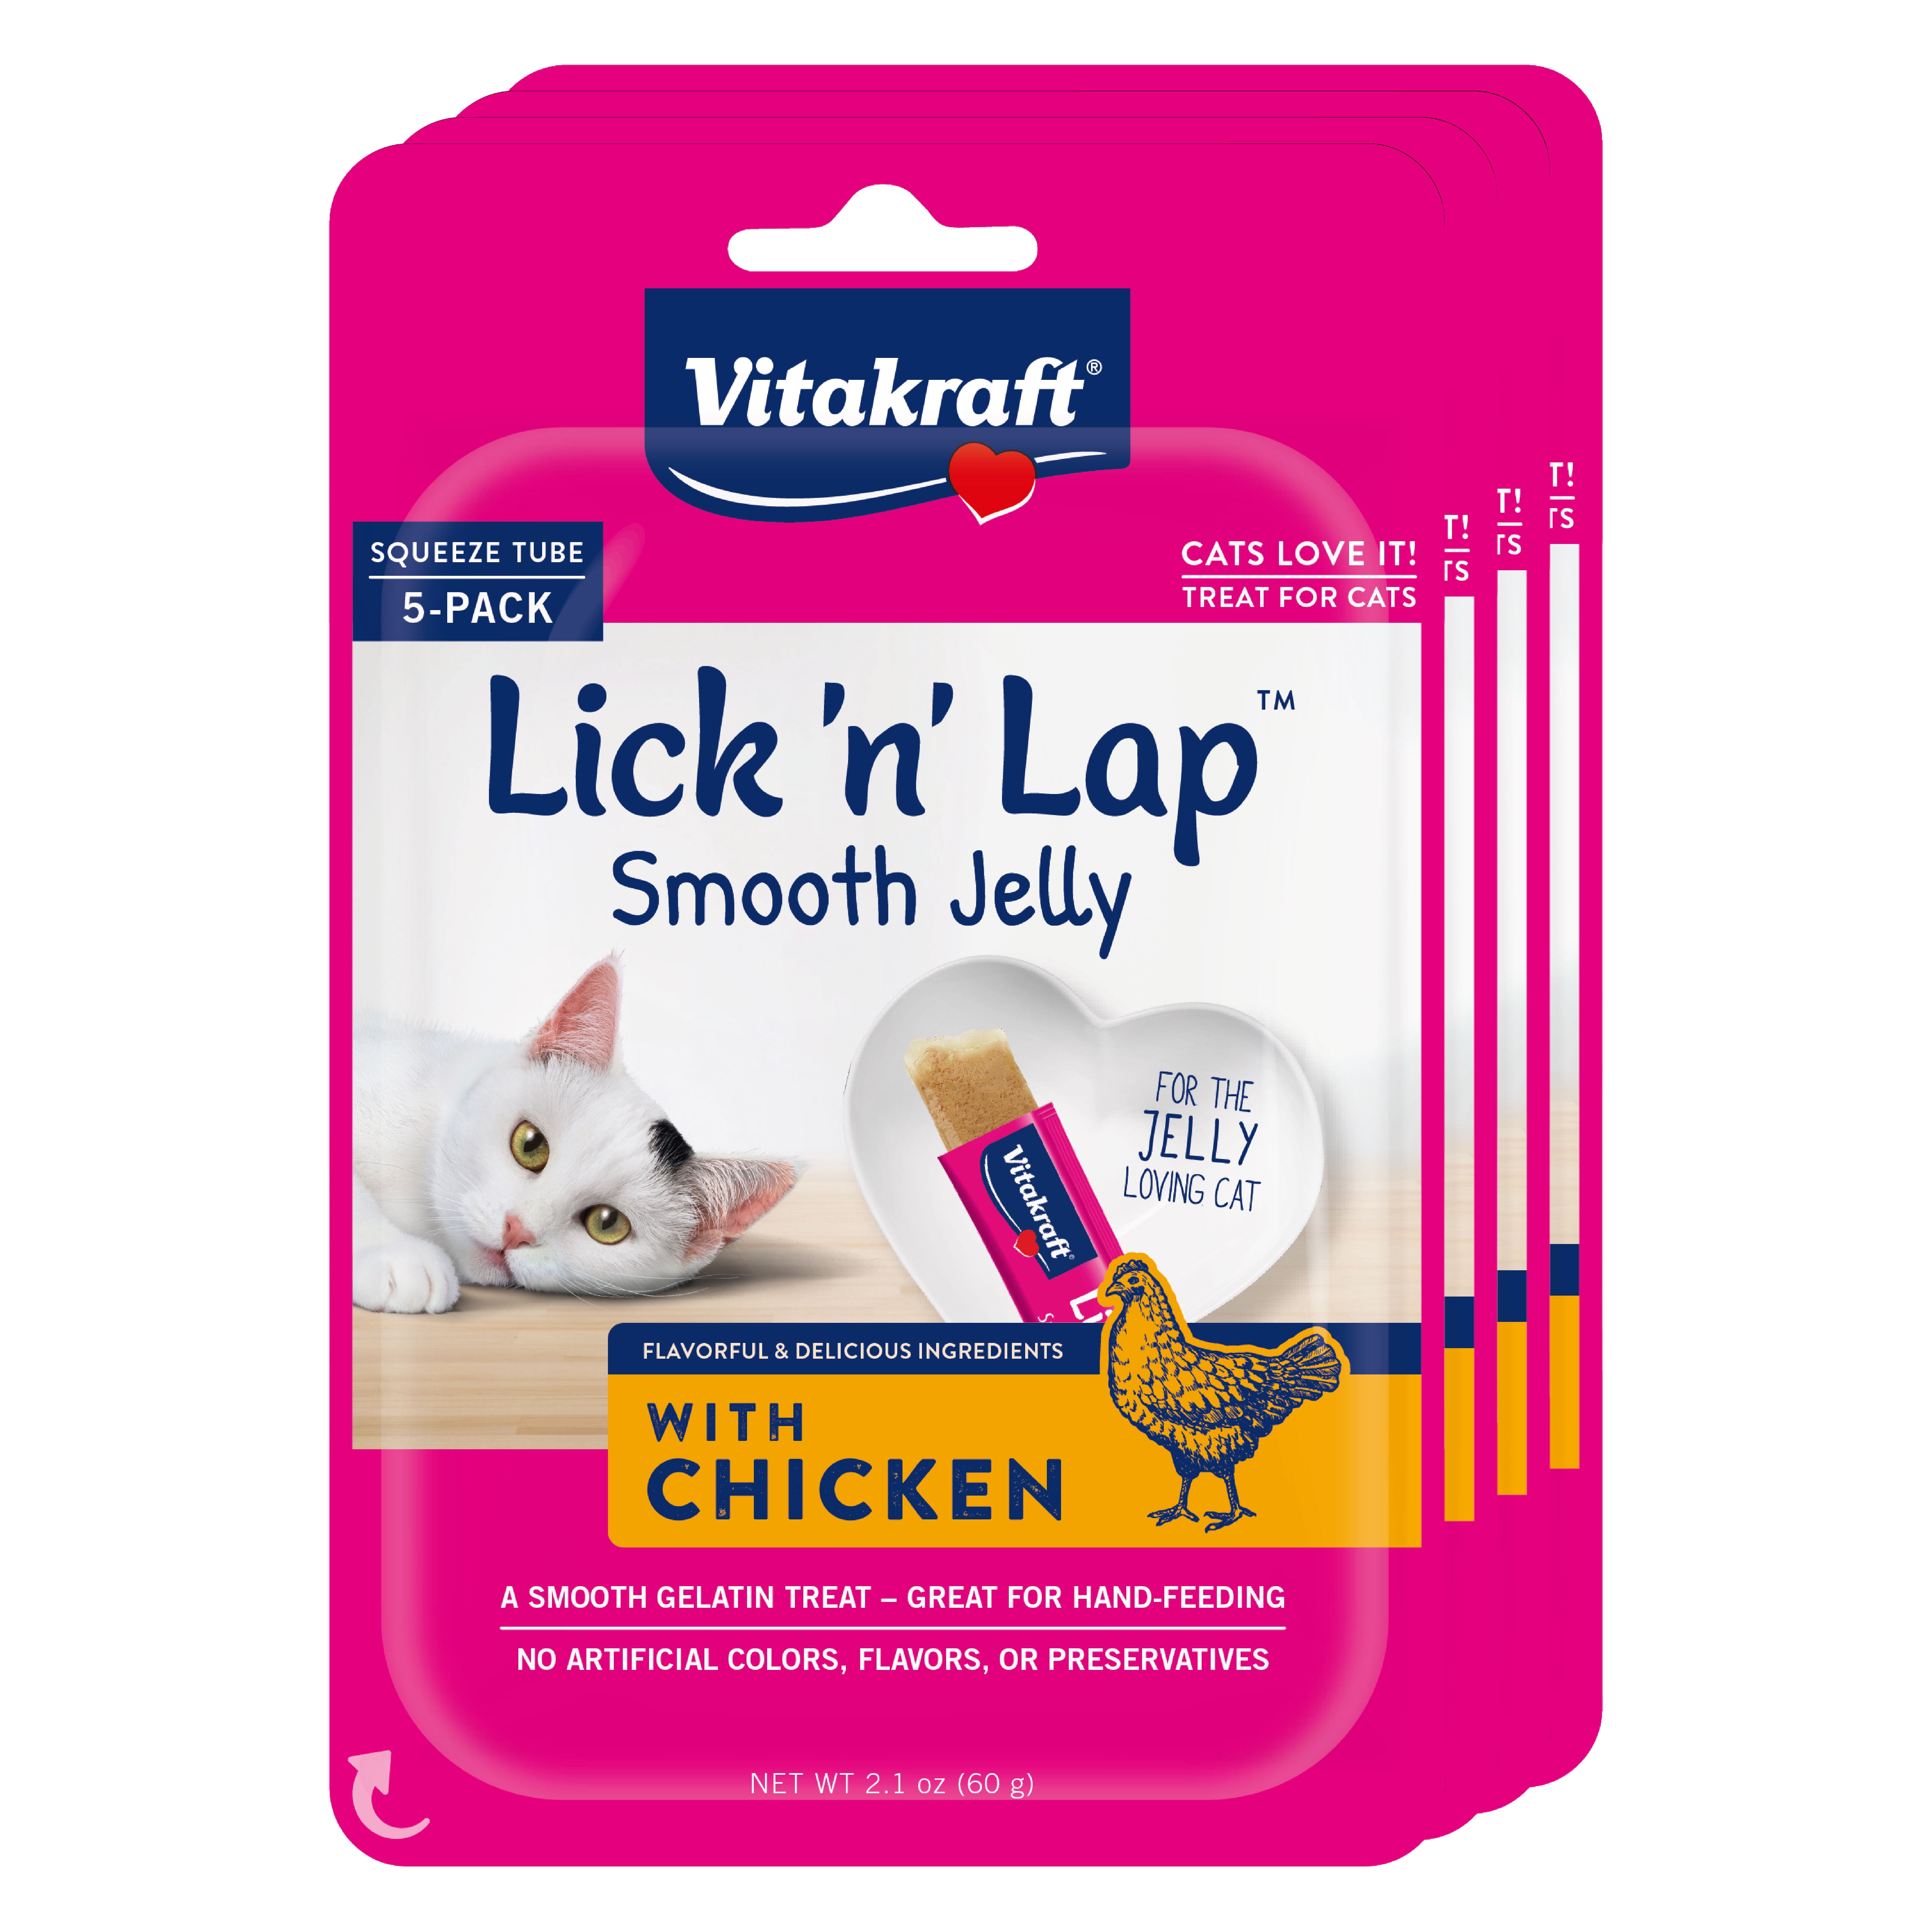 Vitakraft Lick 'n' Lap Smooth Jelly Cat Treat - Salmon Flavor, 20 Pack